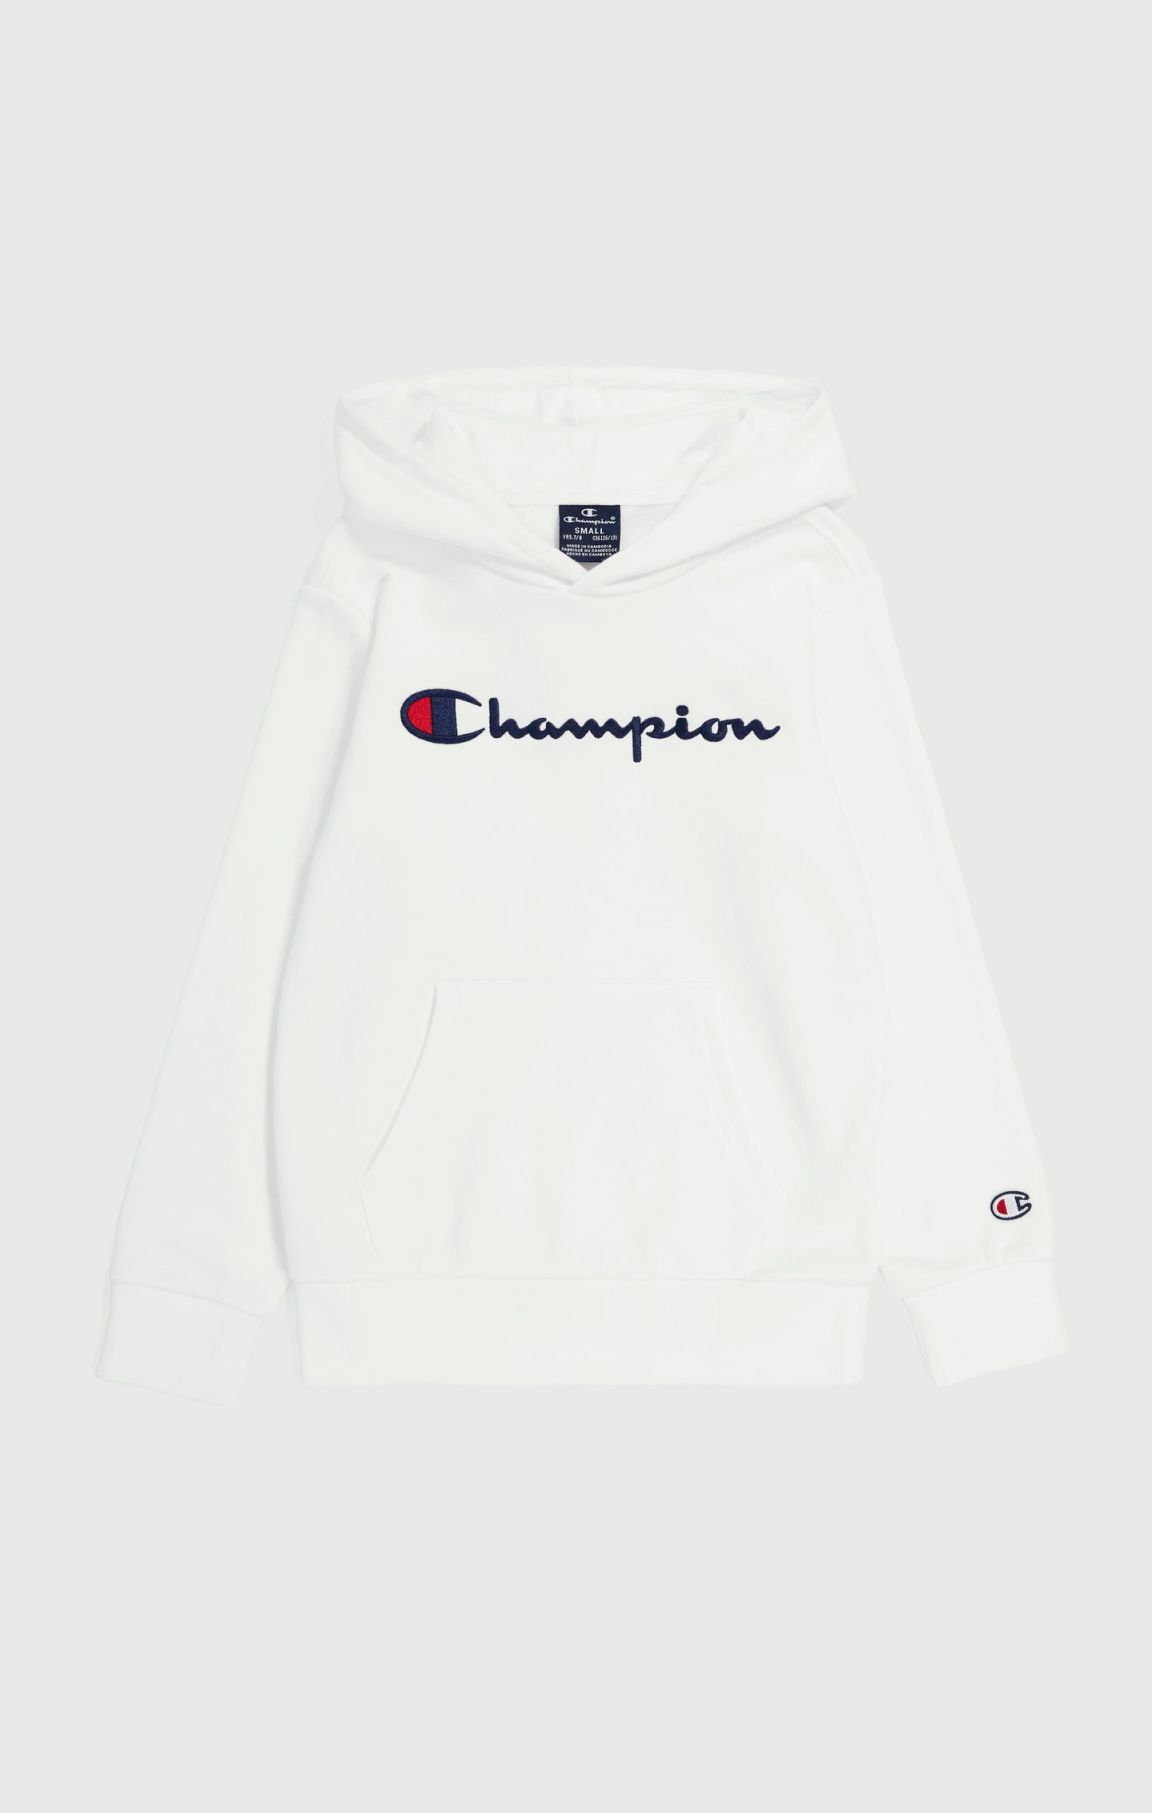 Sweatshirt à capuche et grand logo Champion - Garçons